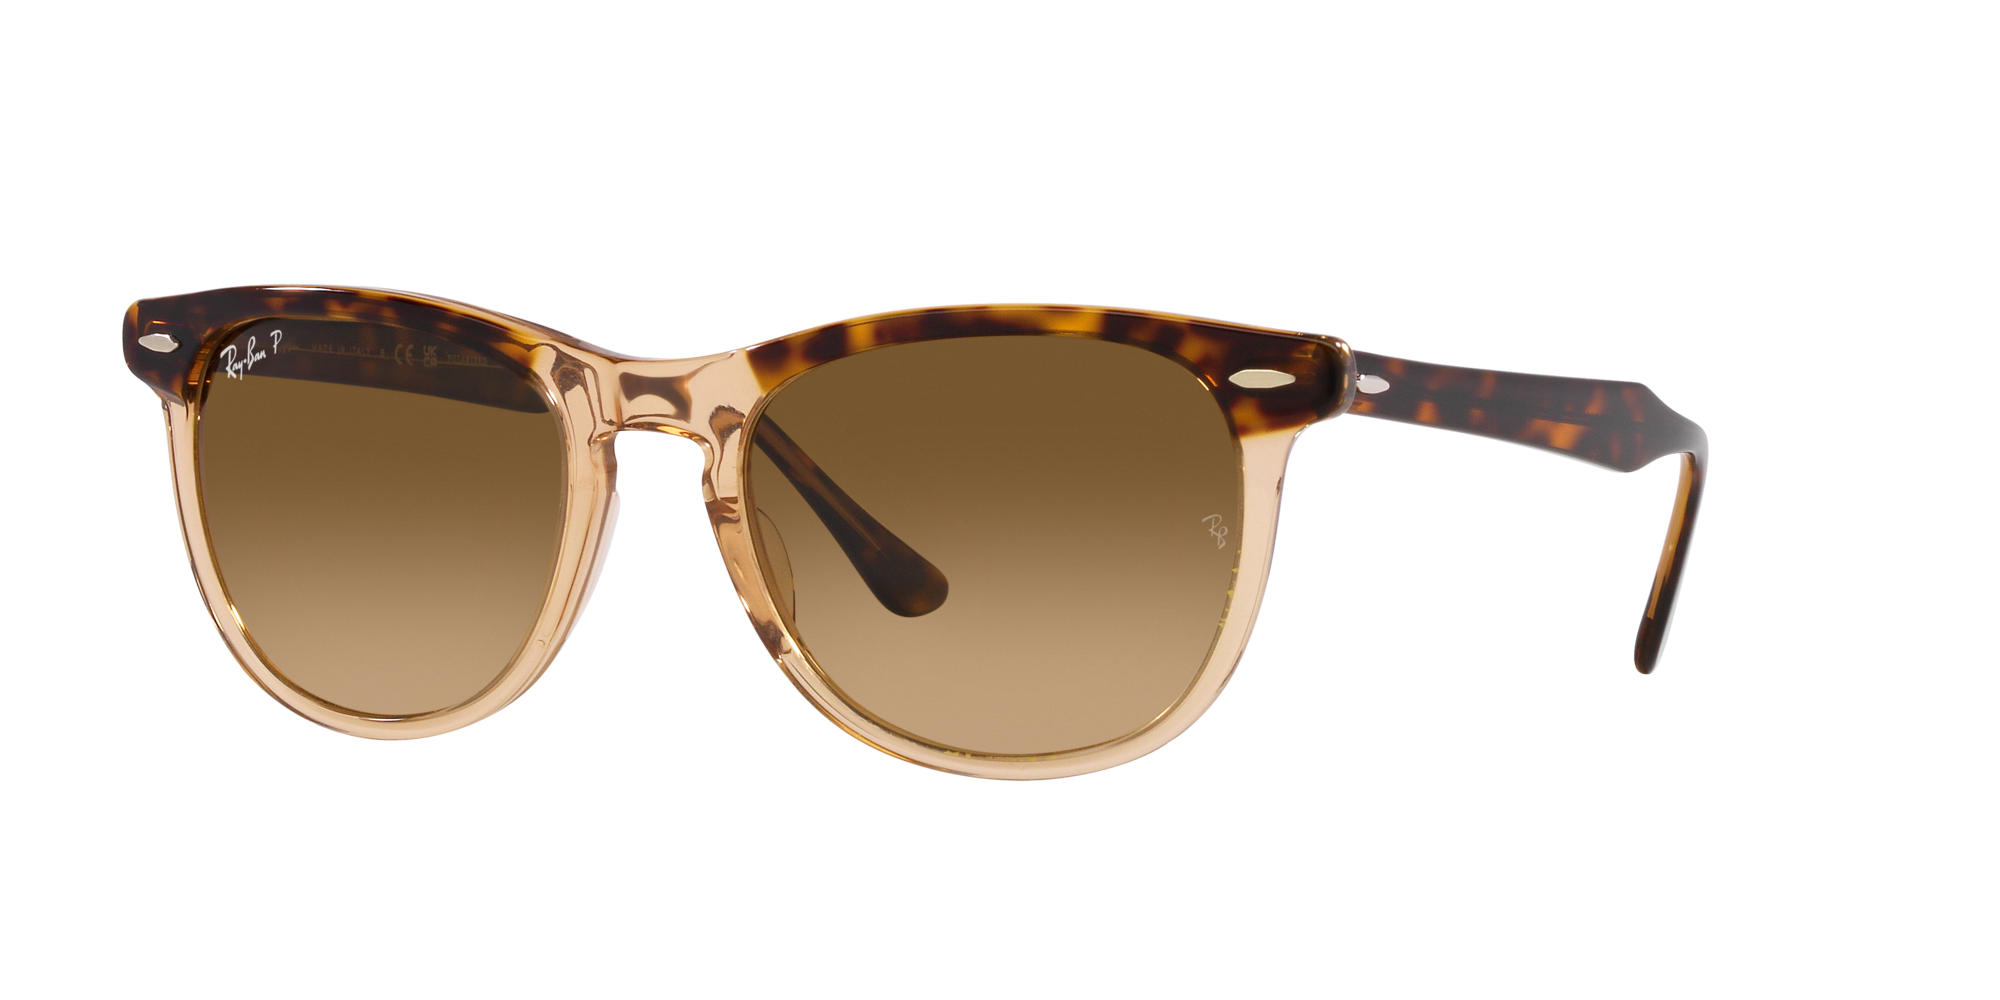 Photochromic Sunglasses Polarized Lens | Photochromic Sunglasses Polar Lens  - Sun - Aliexpress